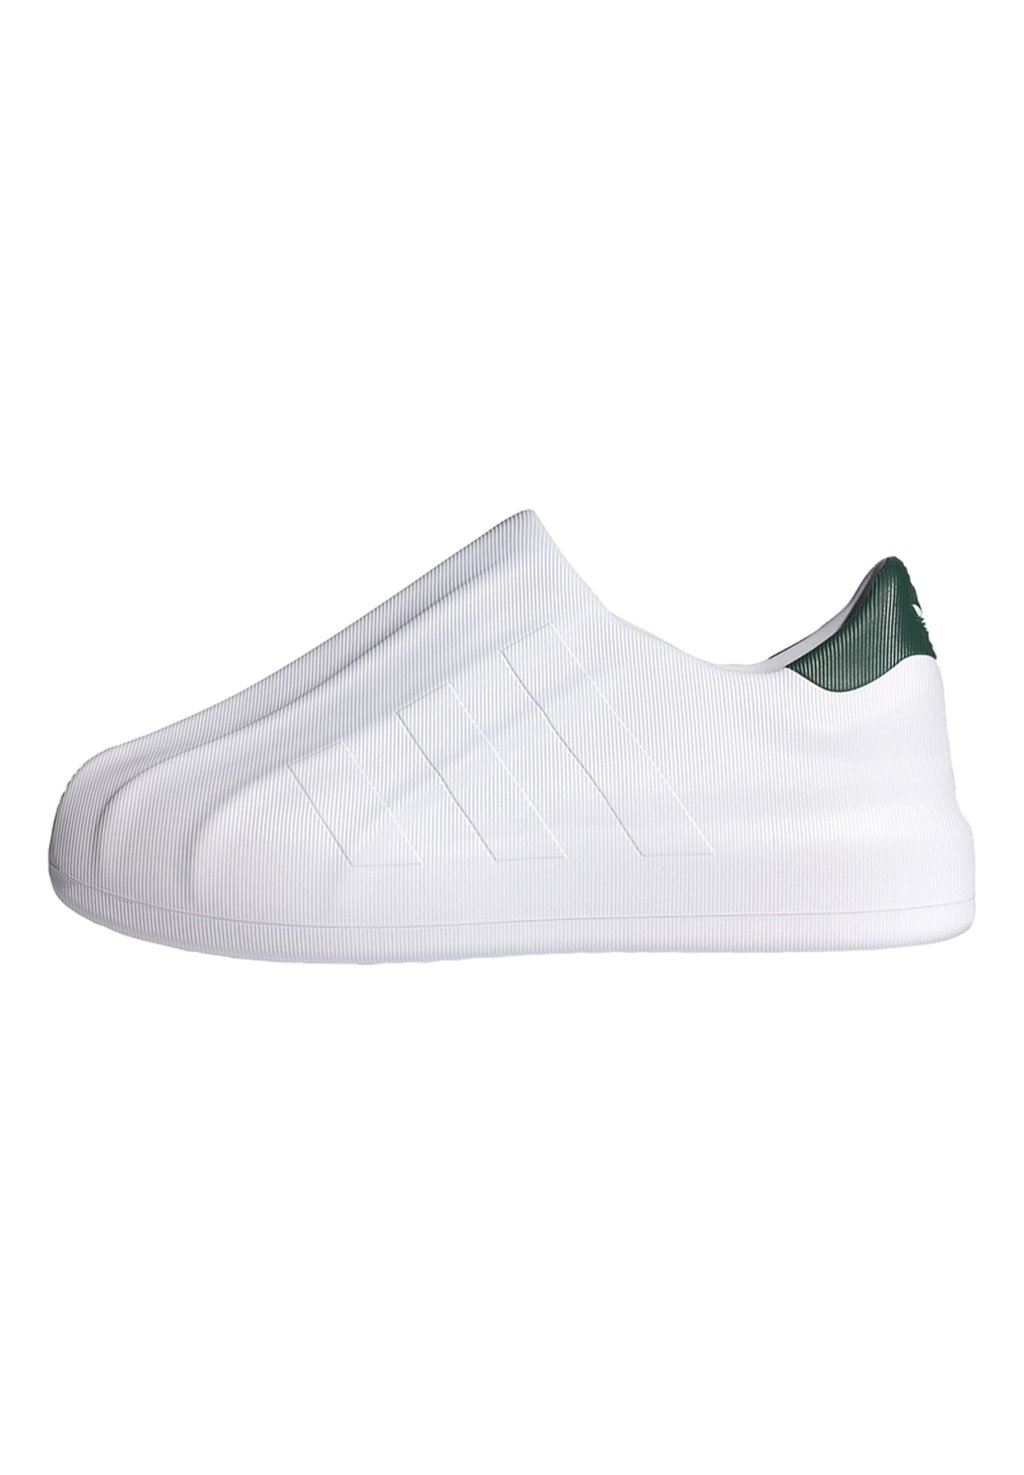 Кроссовки низкие ADIFOM SUPERSTAR UNISEX adidas Originals, цвет ftwr white/collegiate green/ftwr white